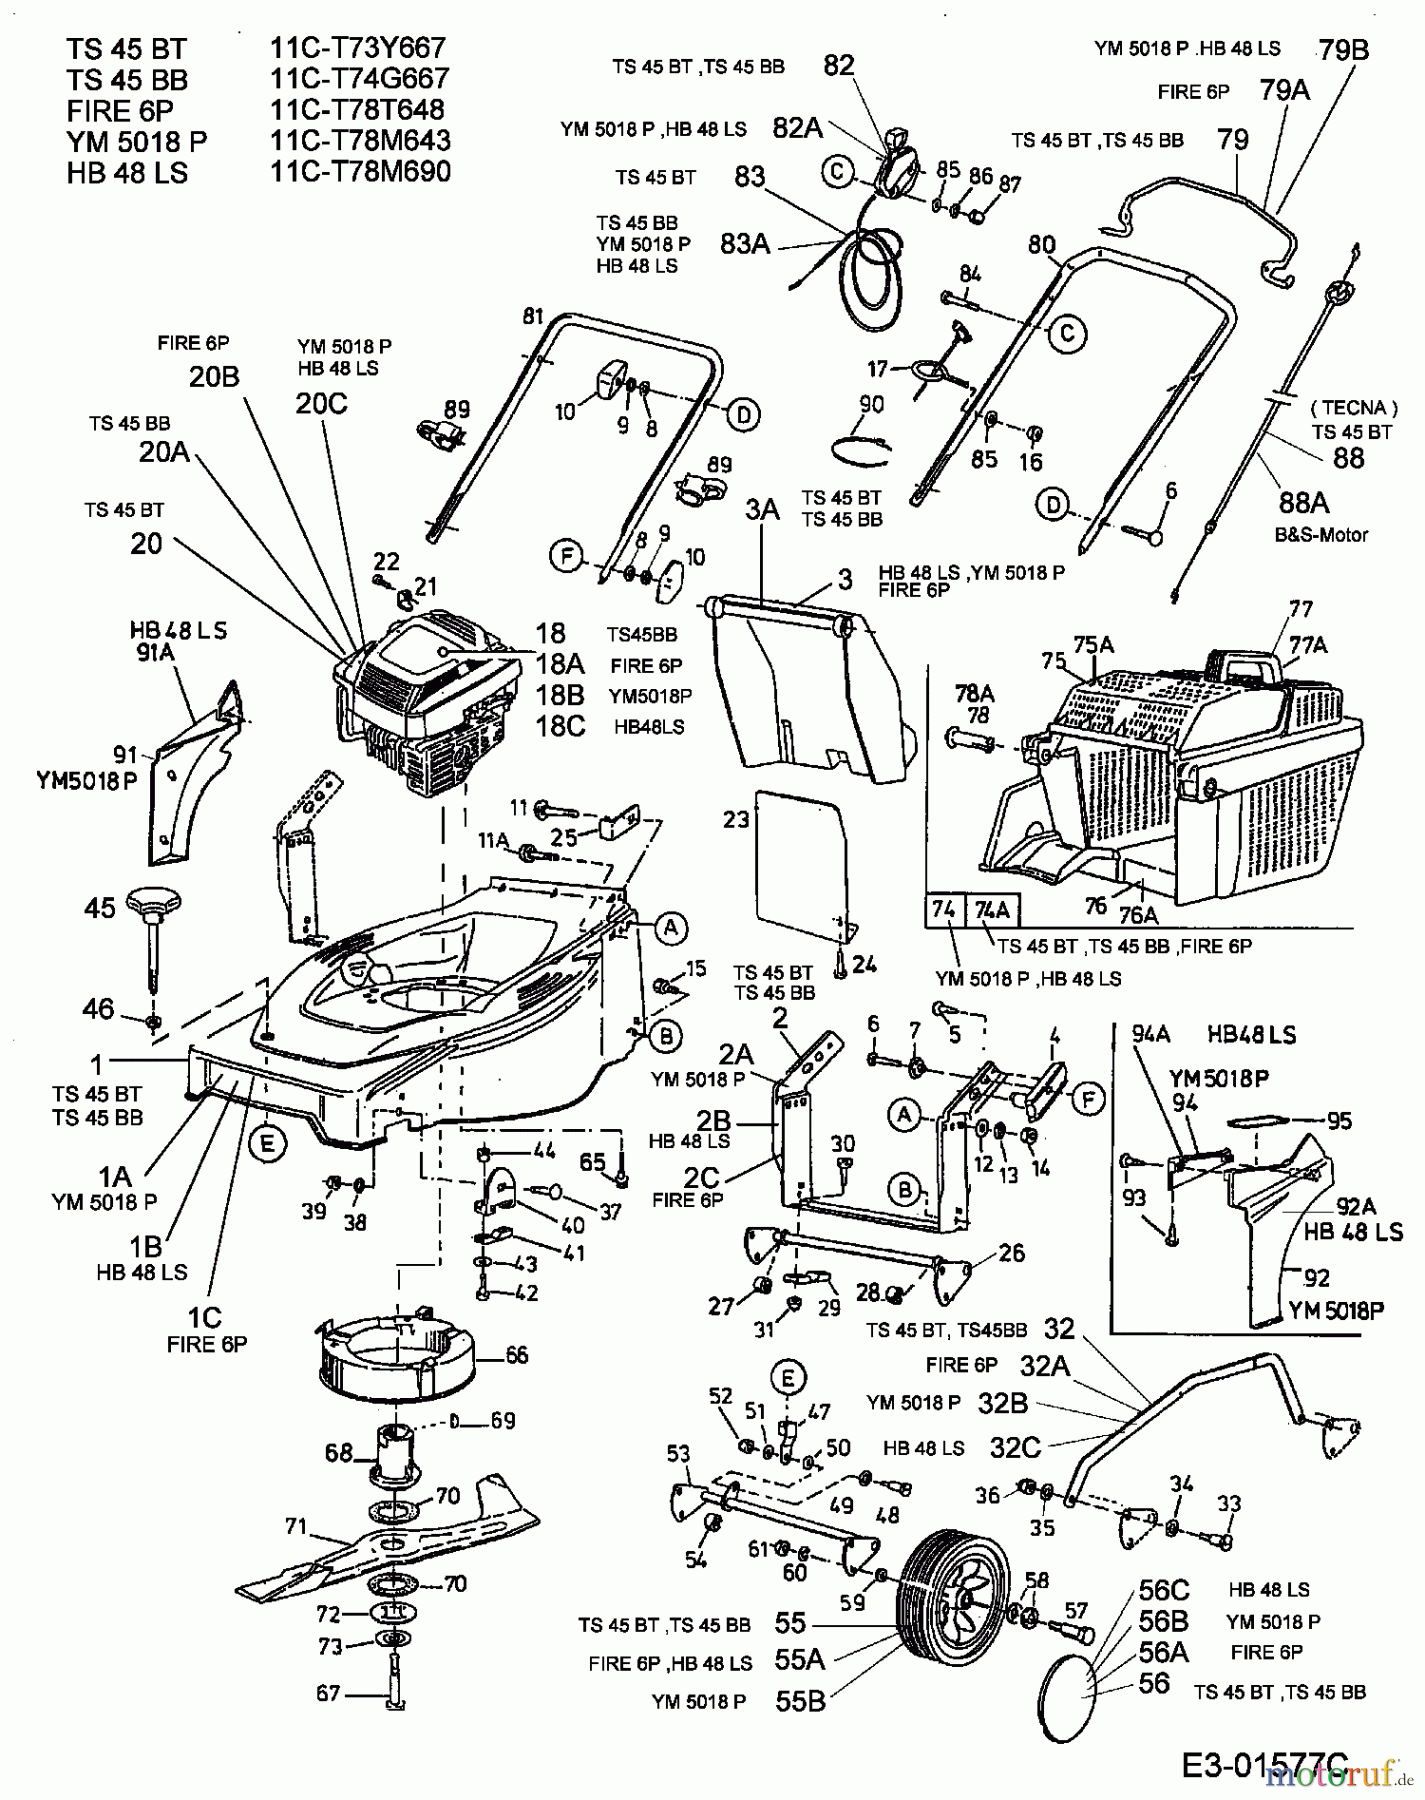  Gutbrod Motormäher HB 48 LS 11C-T78M690  (2003) Grundgerät